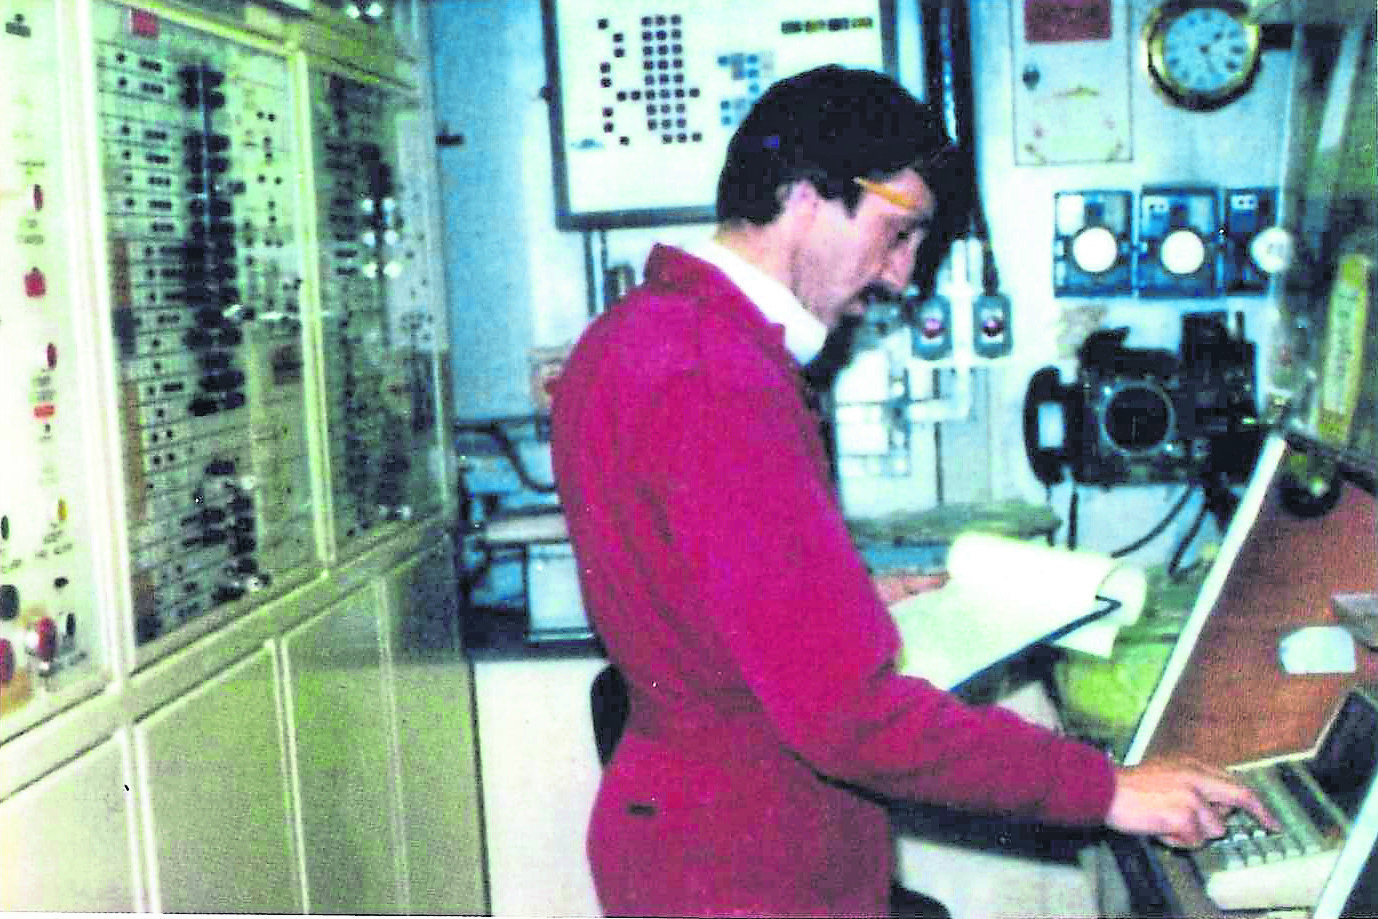 Geoff Bollands was a control room operator